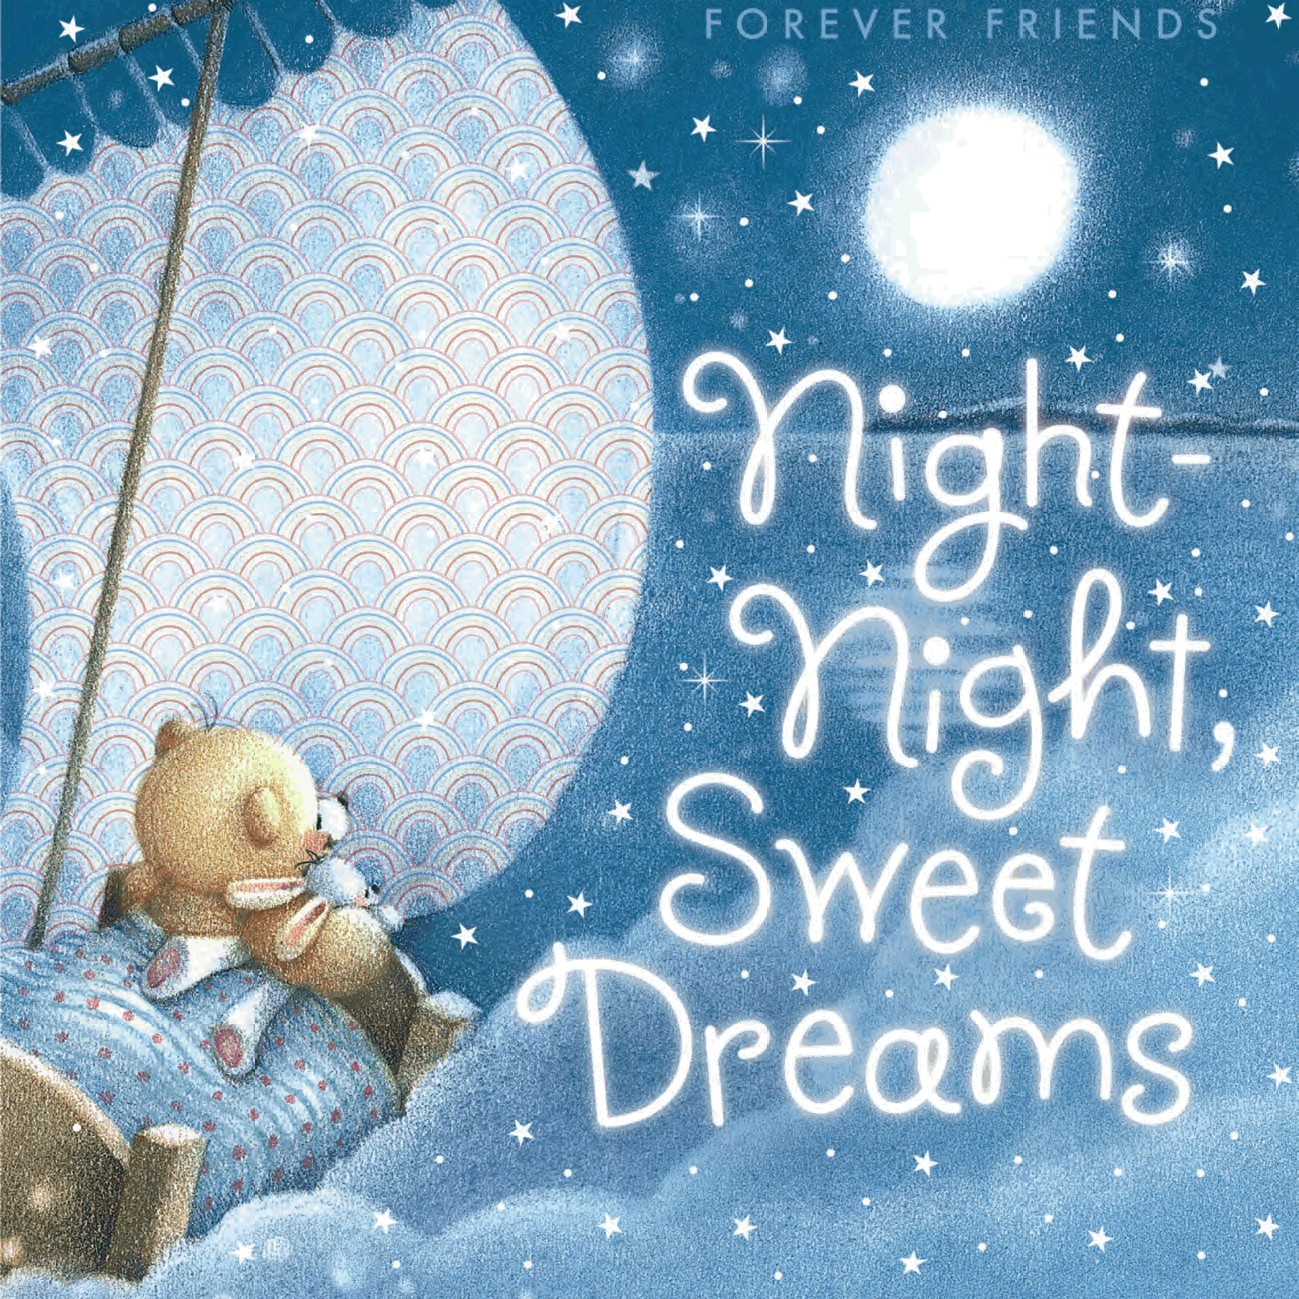 Good Night Sweet Dreams Wallpaper Pics